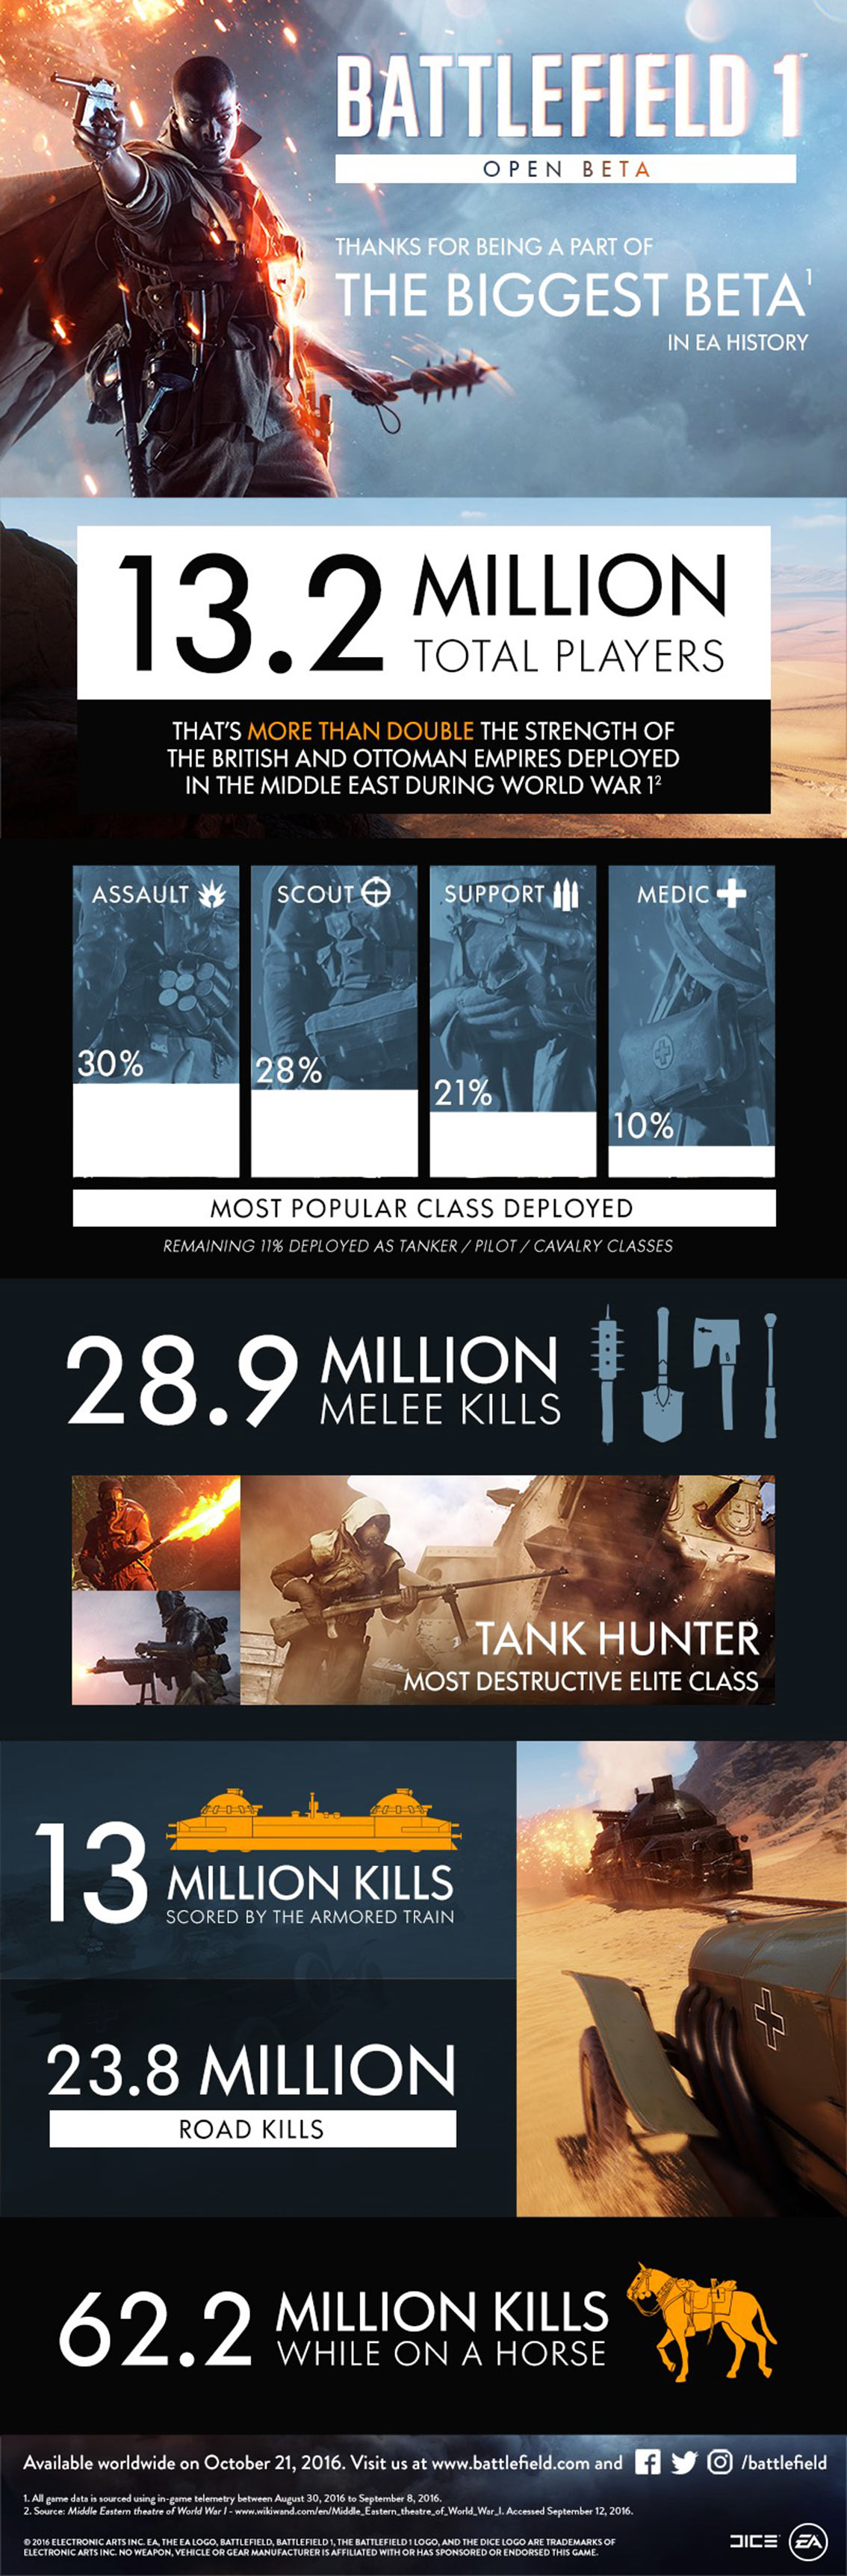 Battlefield 1 Open Beta - Video Game Infographic